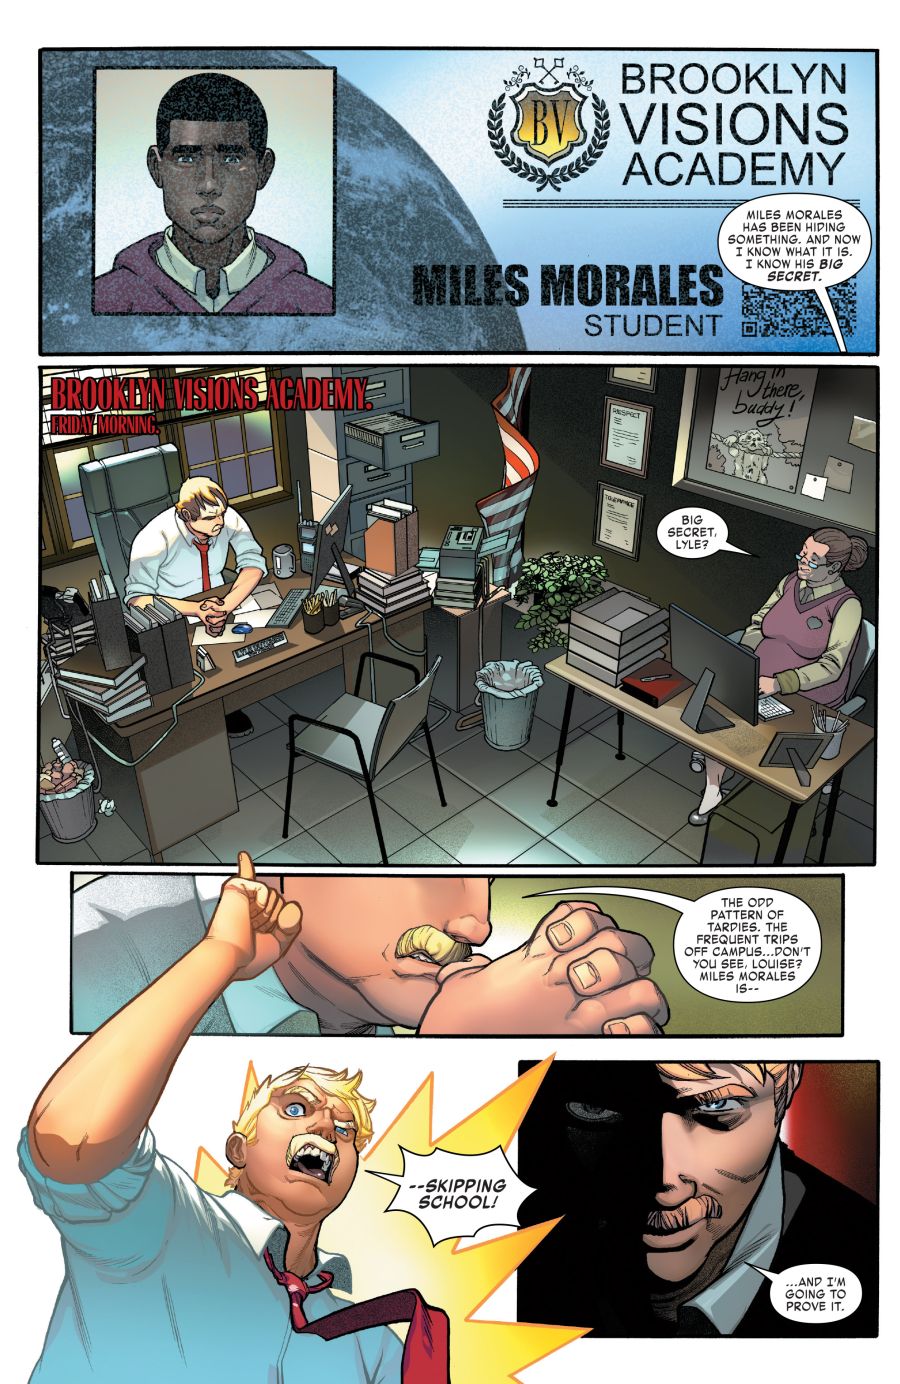 Miles Morales: Spider-Man #4